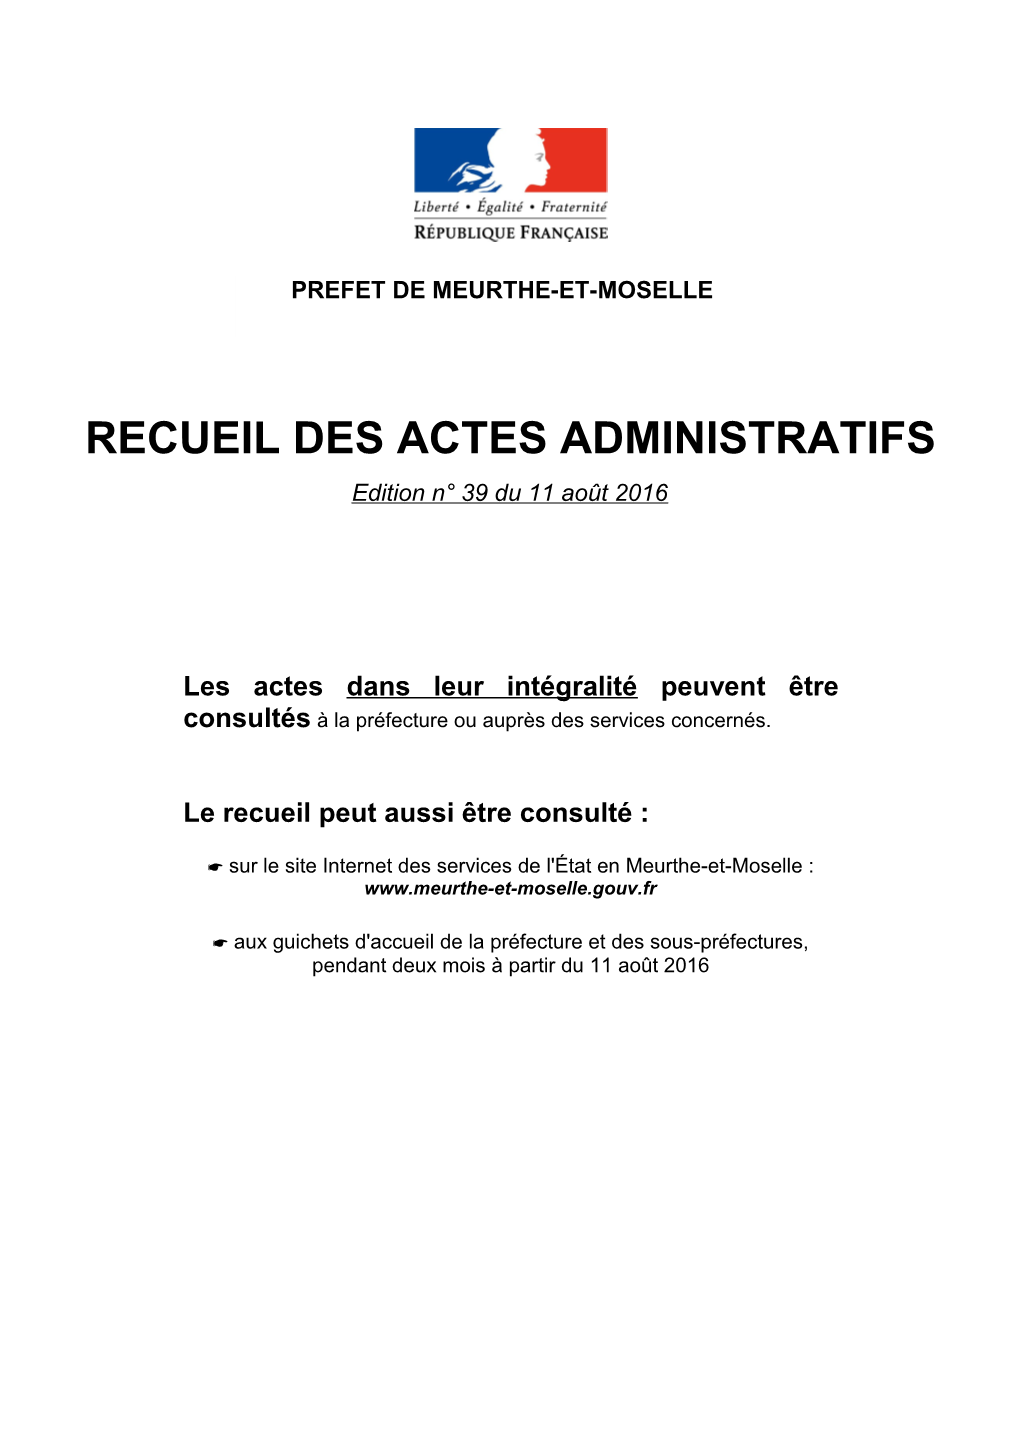 RECUEIL DES ACTES ADMINISTRATIFS Edition N° 39 Du 11 Août 2016